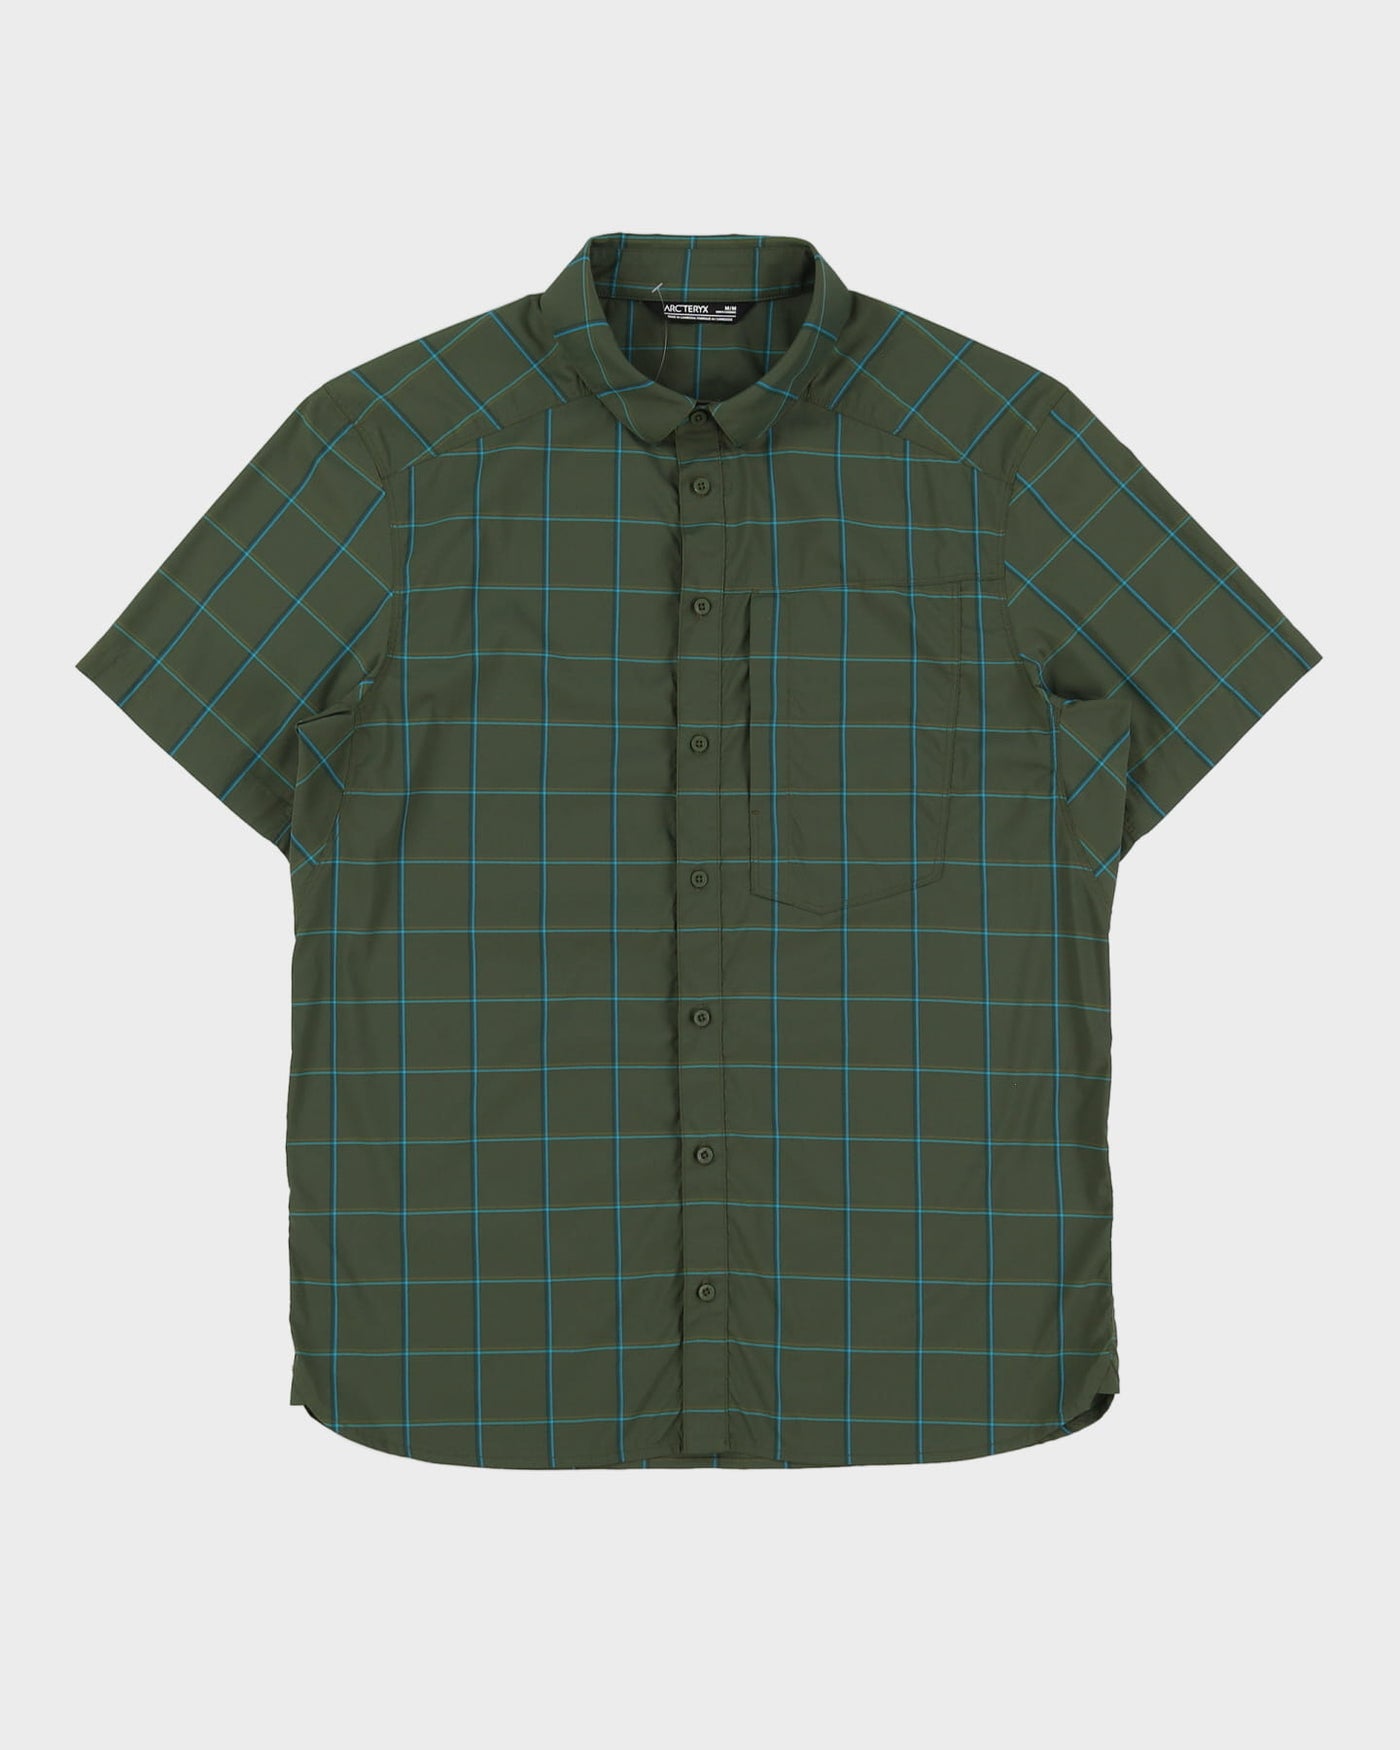 Arc'Teryx Green Check Patterned Work Shirt - M